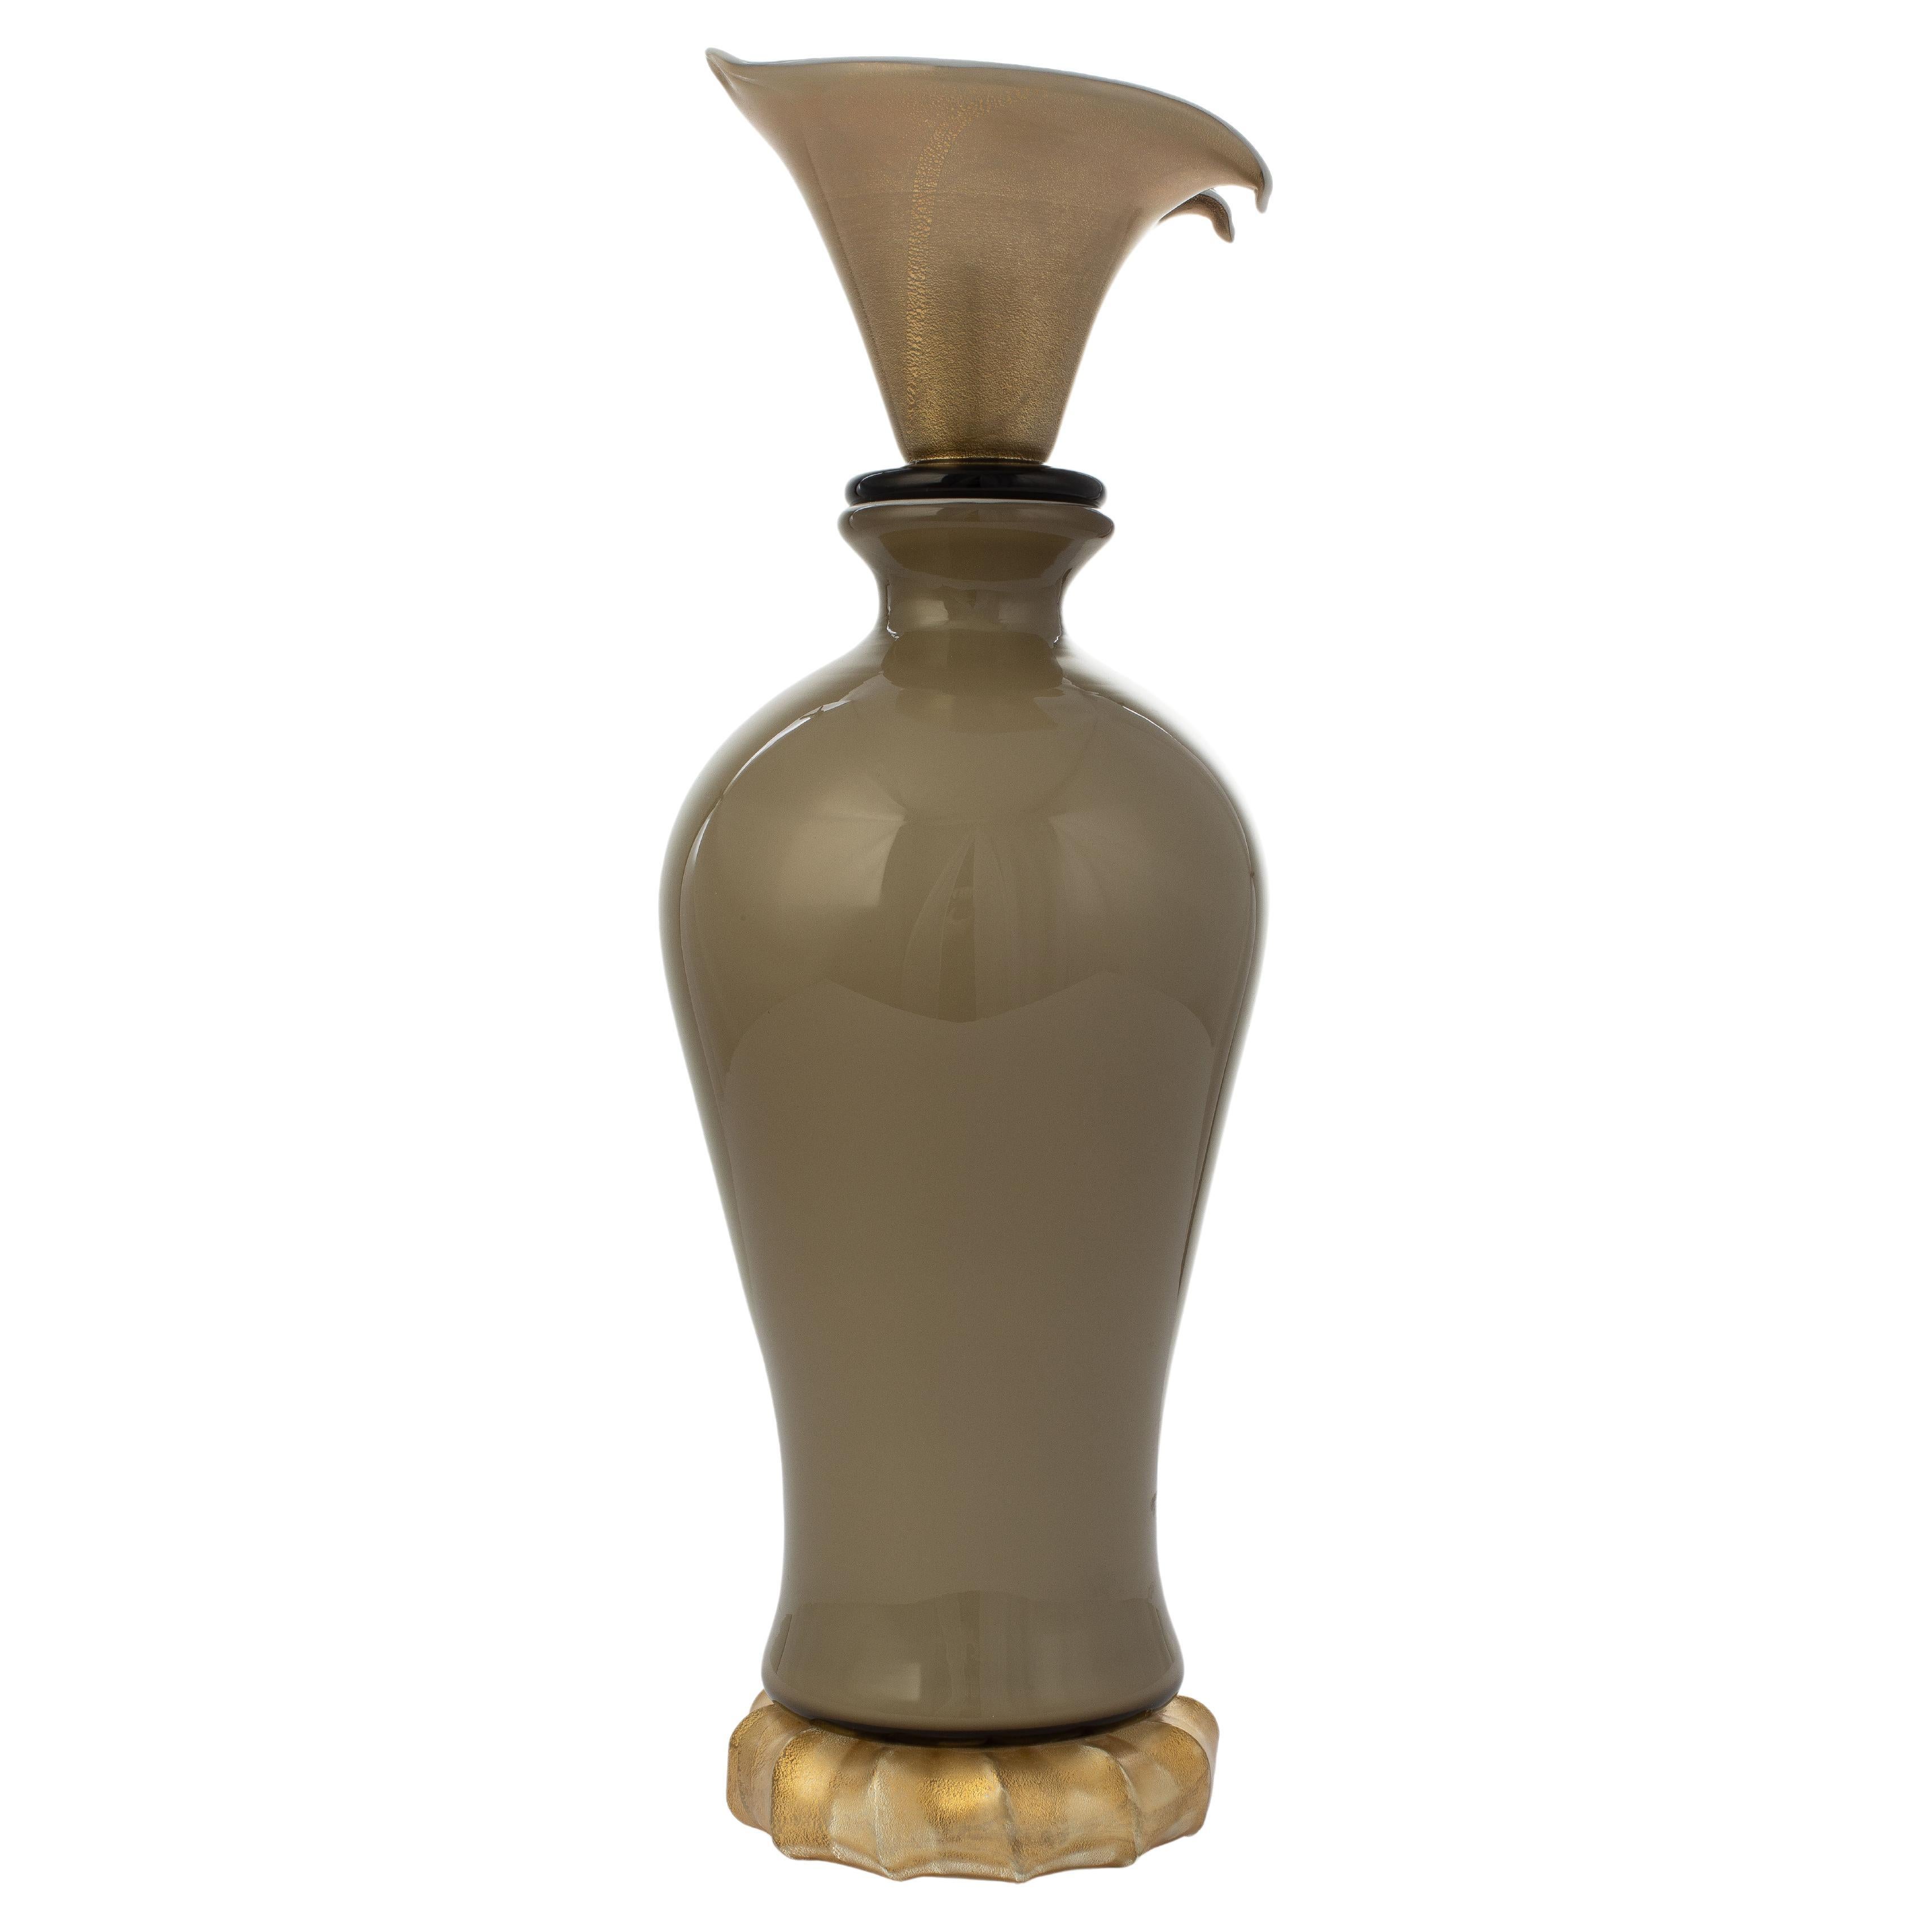 1295 Murano Hand Made Art Glass Venezia Doge Vase / Flasche